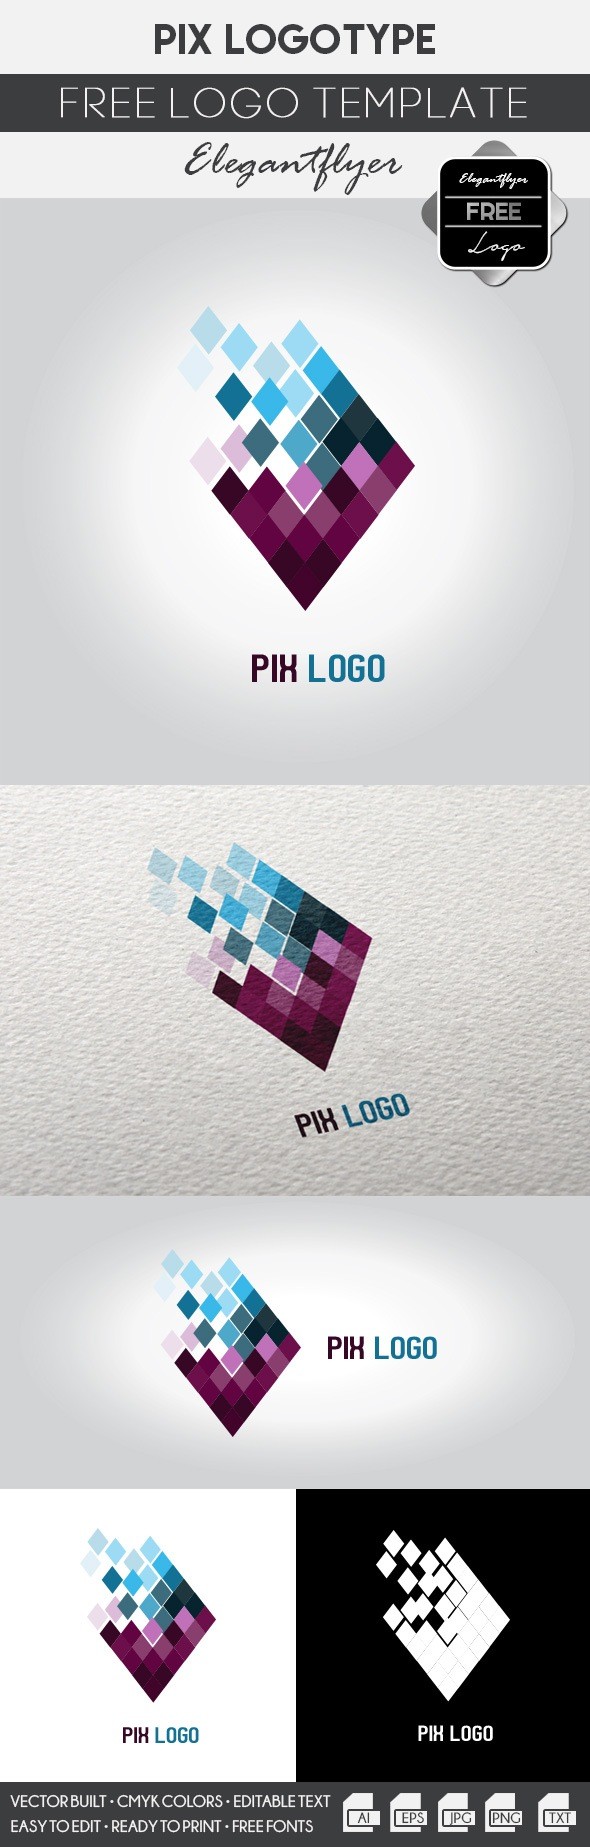 Pix logo by ElegantFlyer